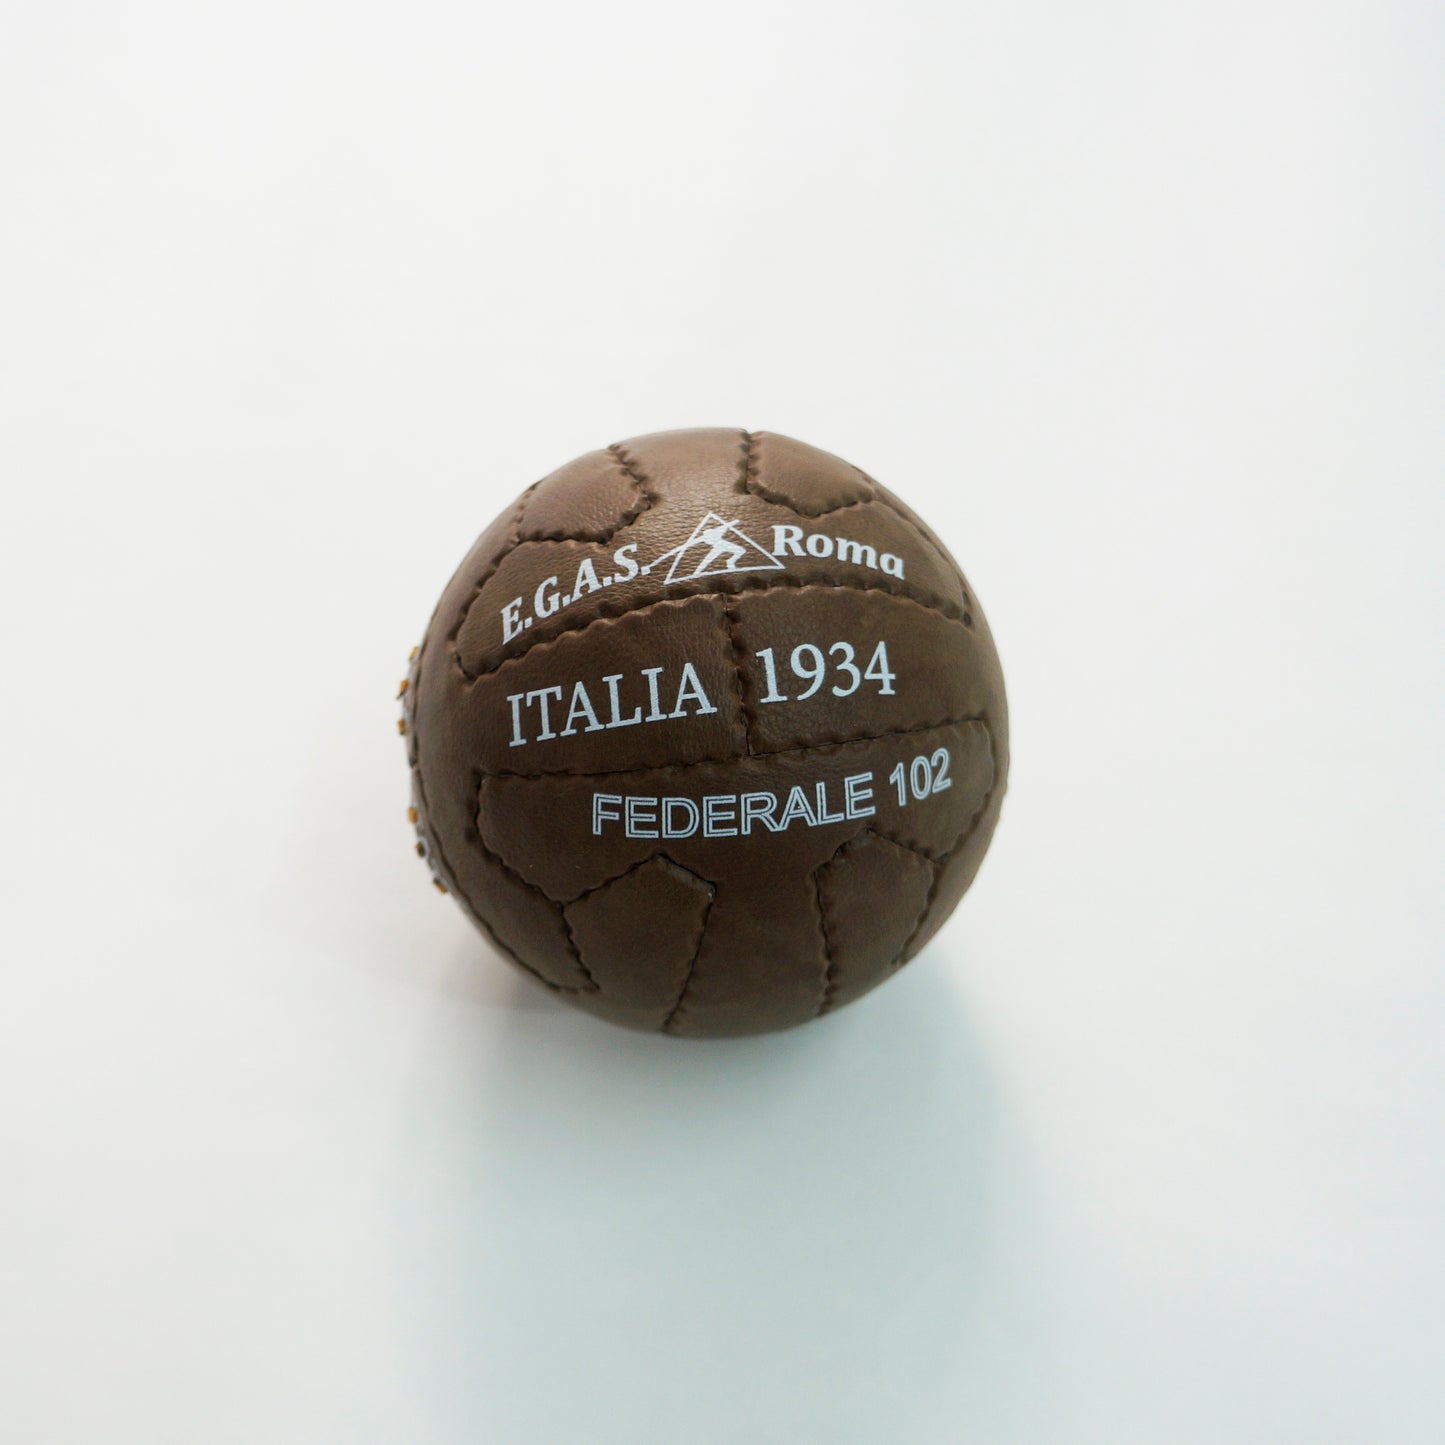 Mini Balón 1934 Italia FEDERALE 102